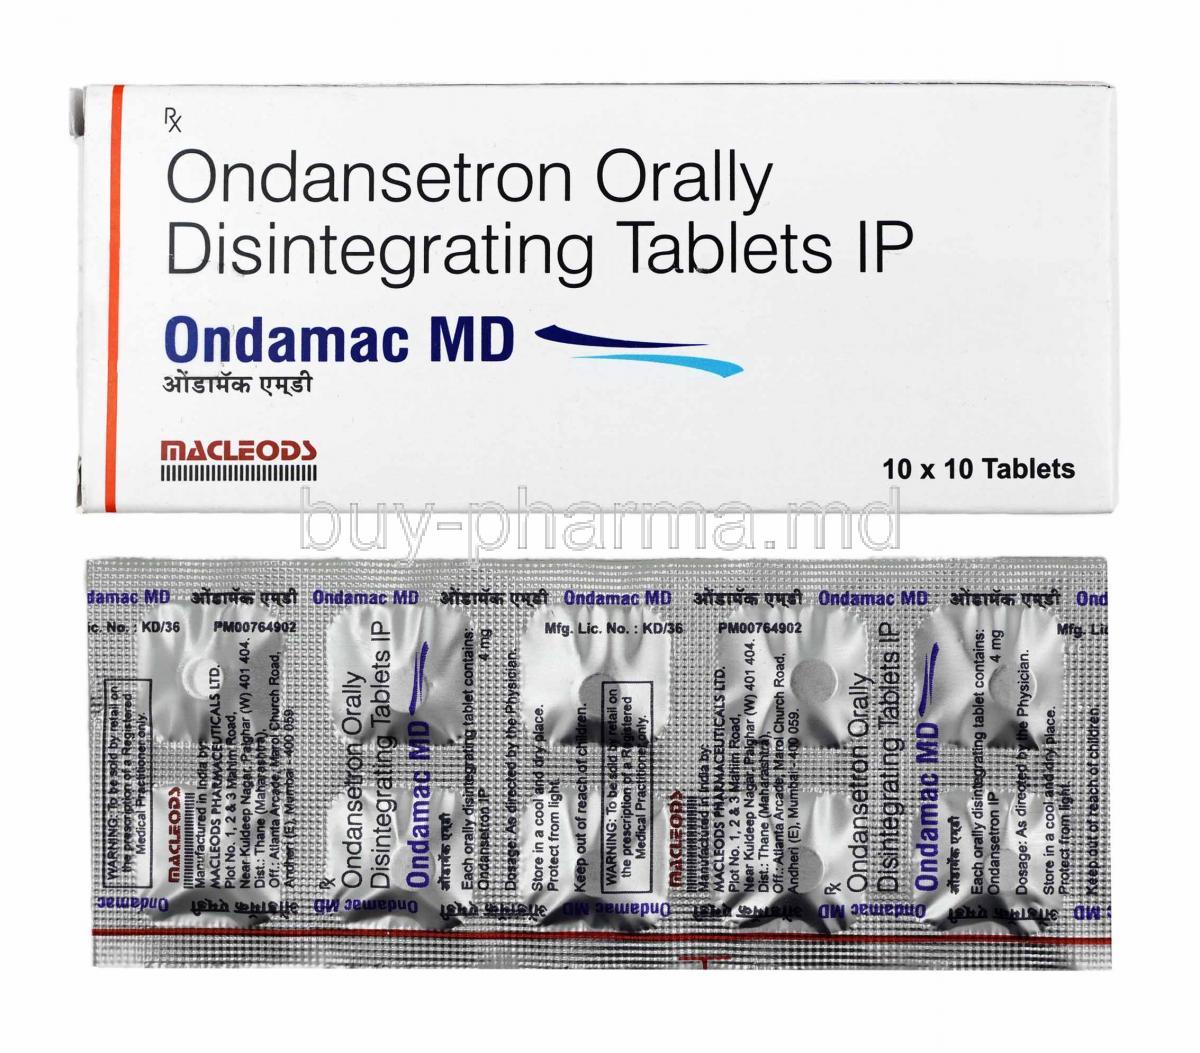 Ondamac MD, Ondansetron box and tablets